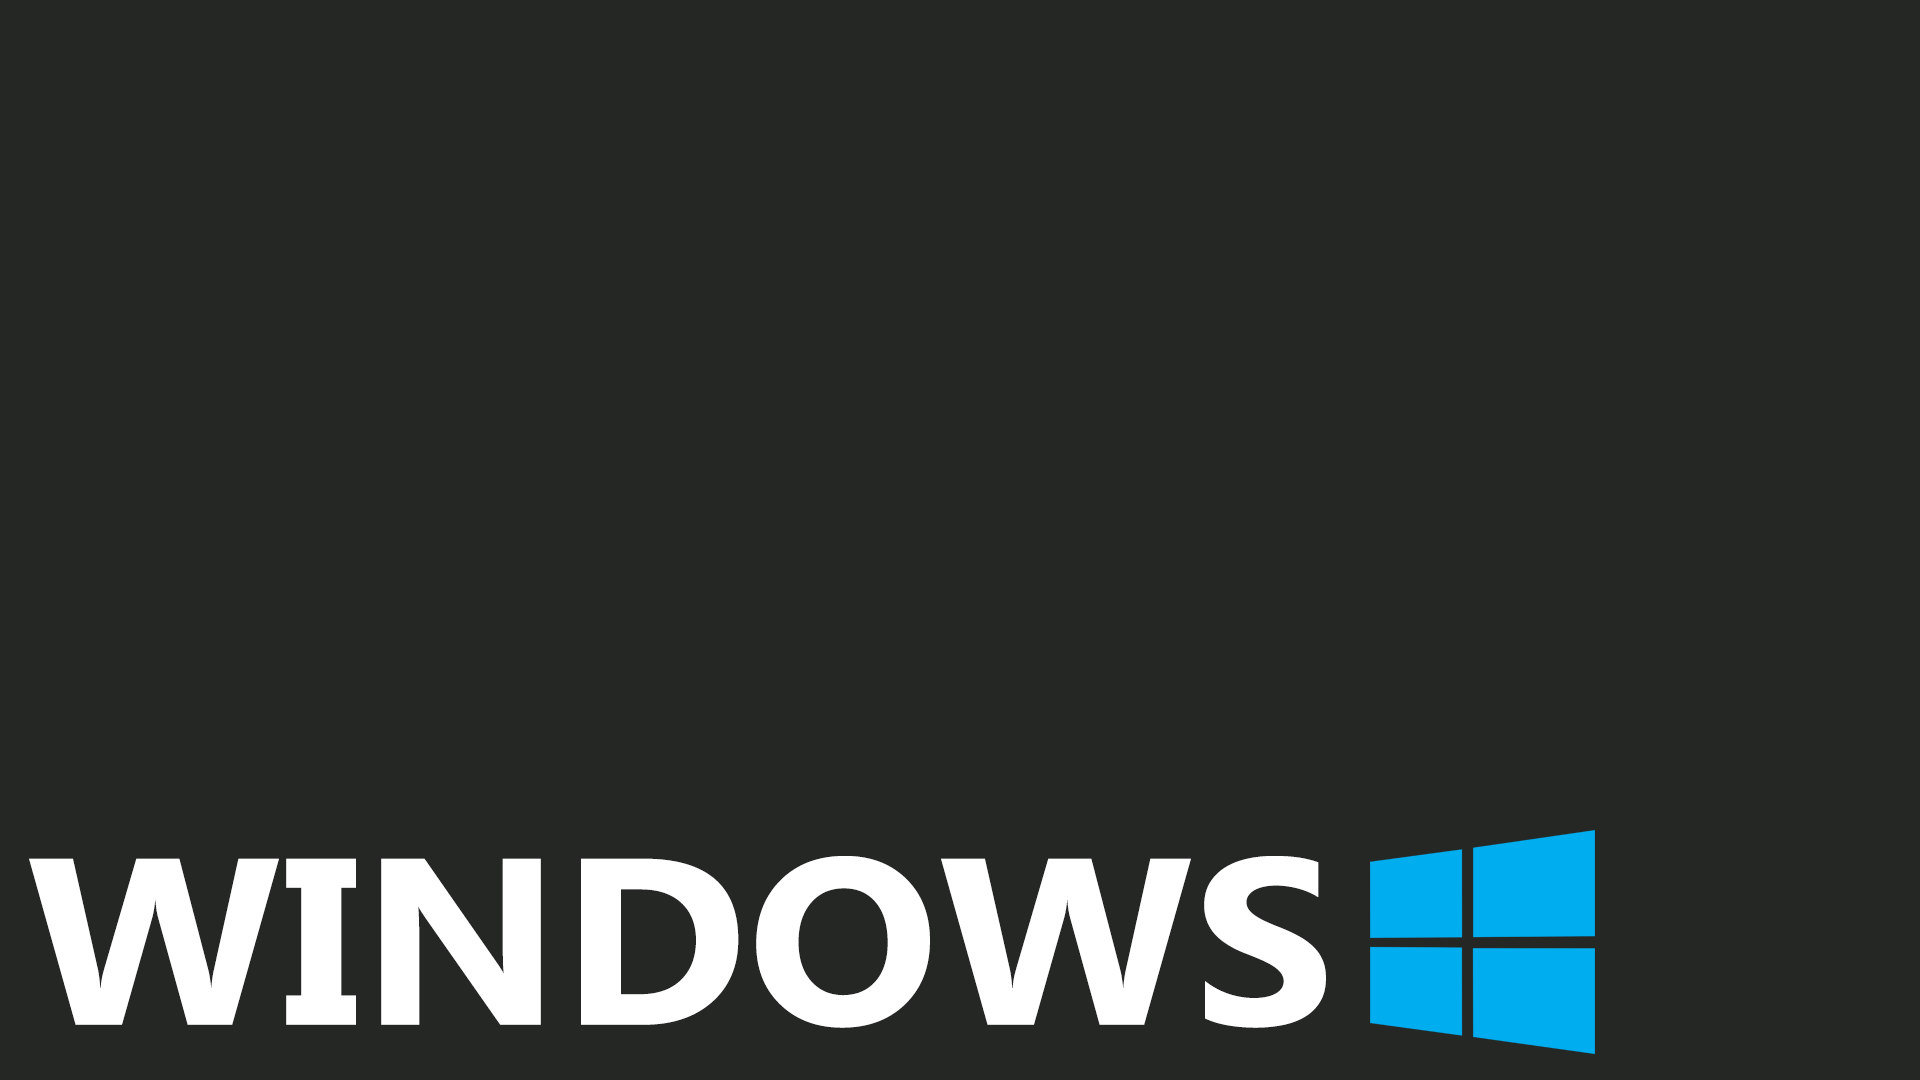 General 1920x1080 computer Microsoft Windows logo cyan gray background minimalism simple background operating system